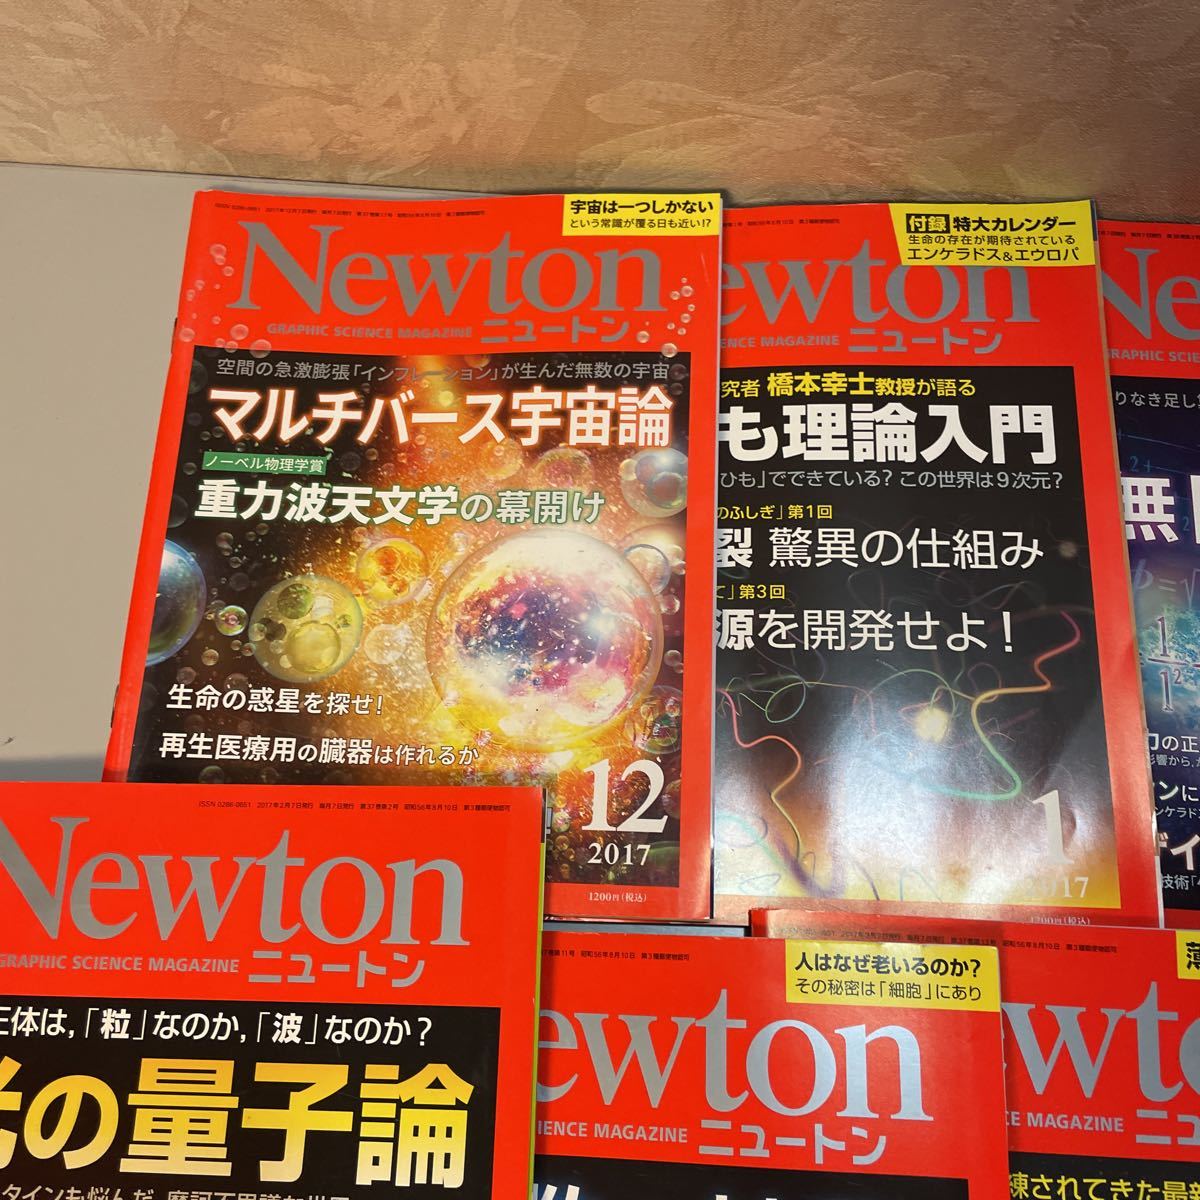 Newton ニュートン 科学雑誌 9冊セット(中古)のヤフオク落札情報